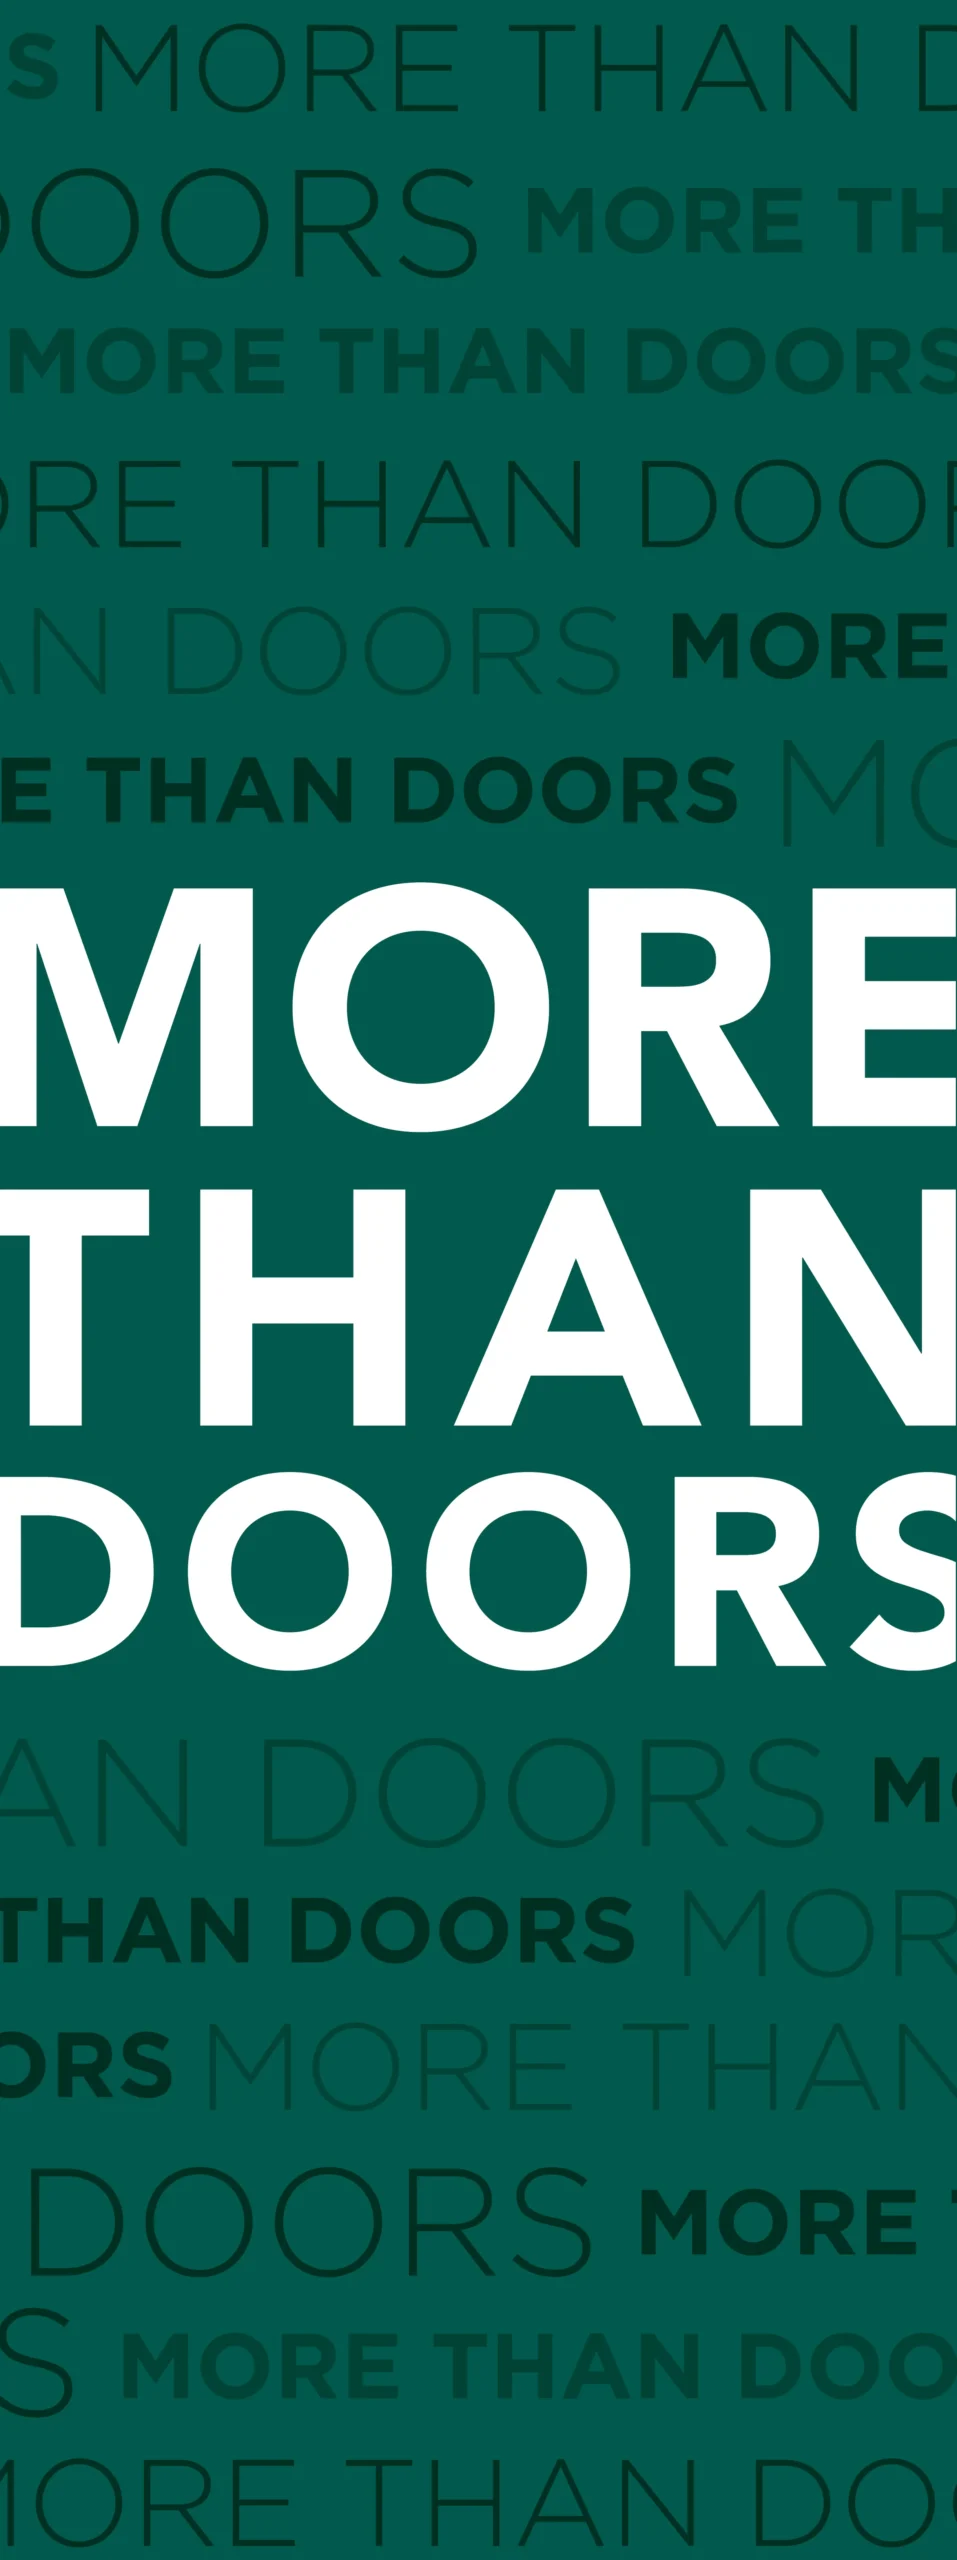 More than doors